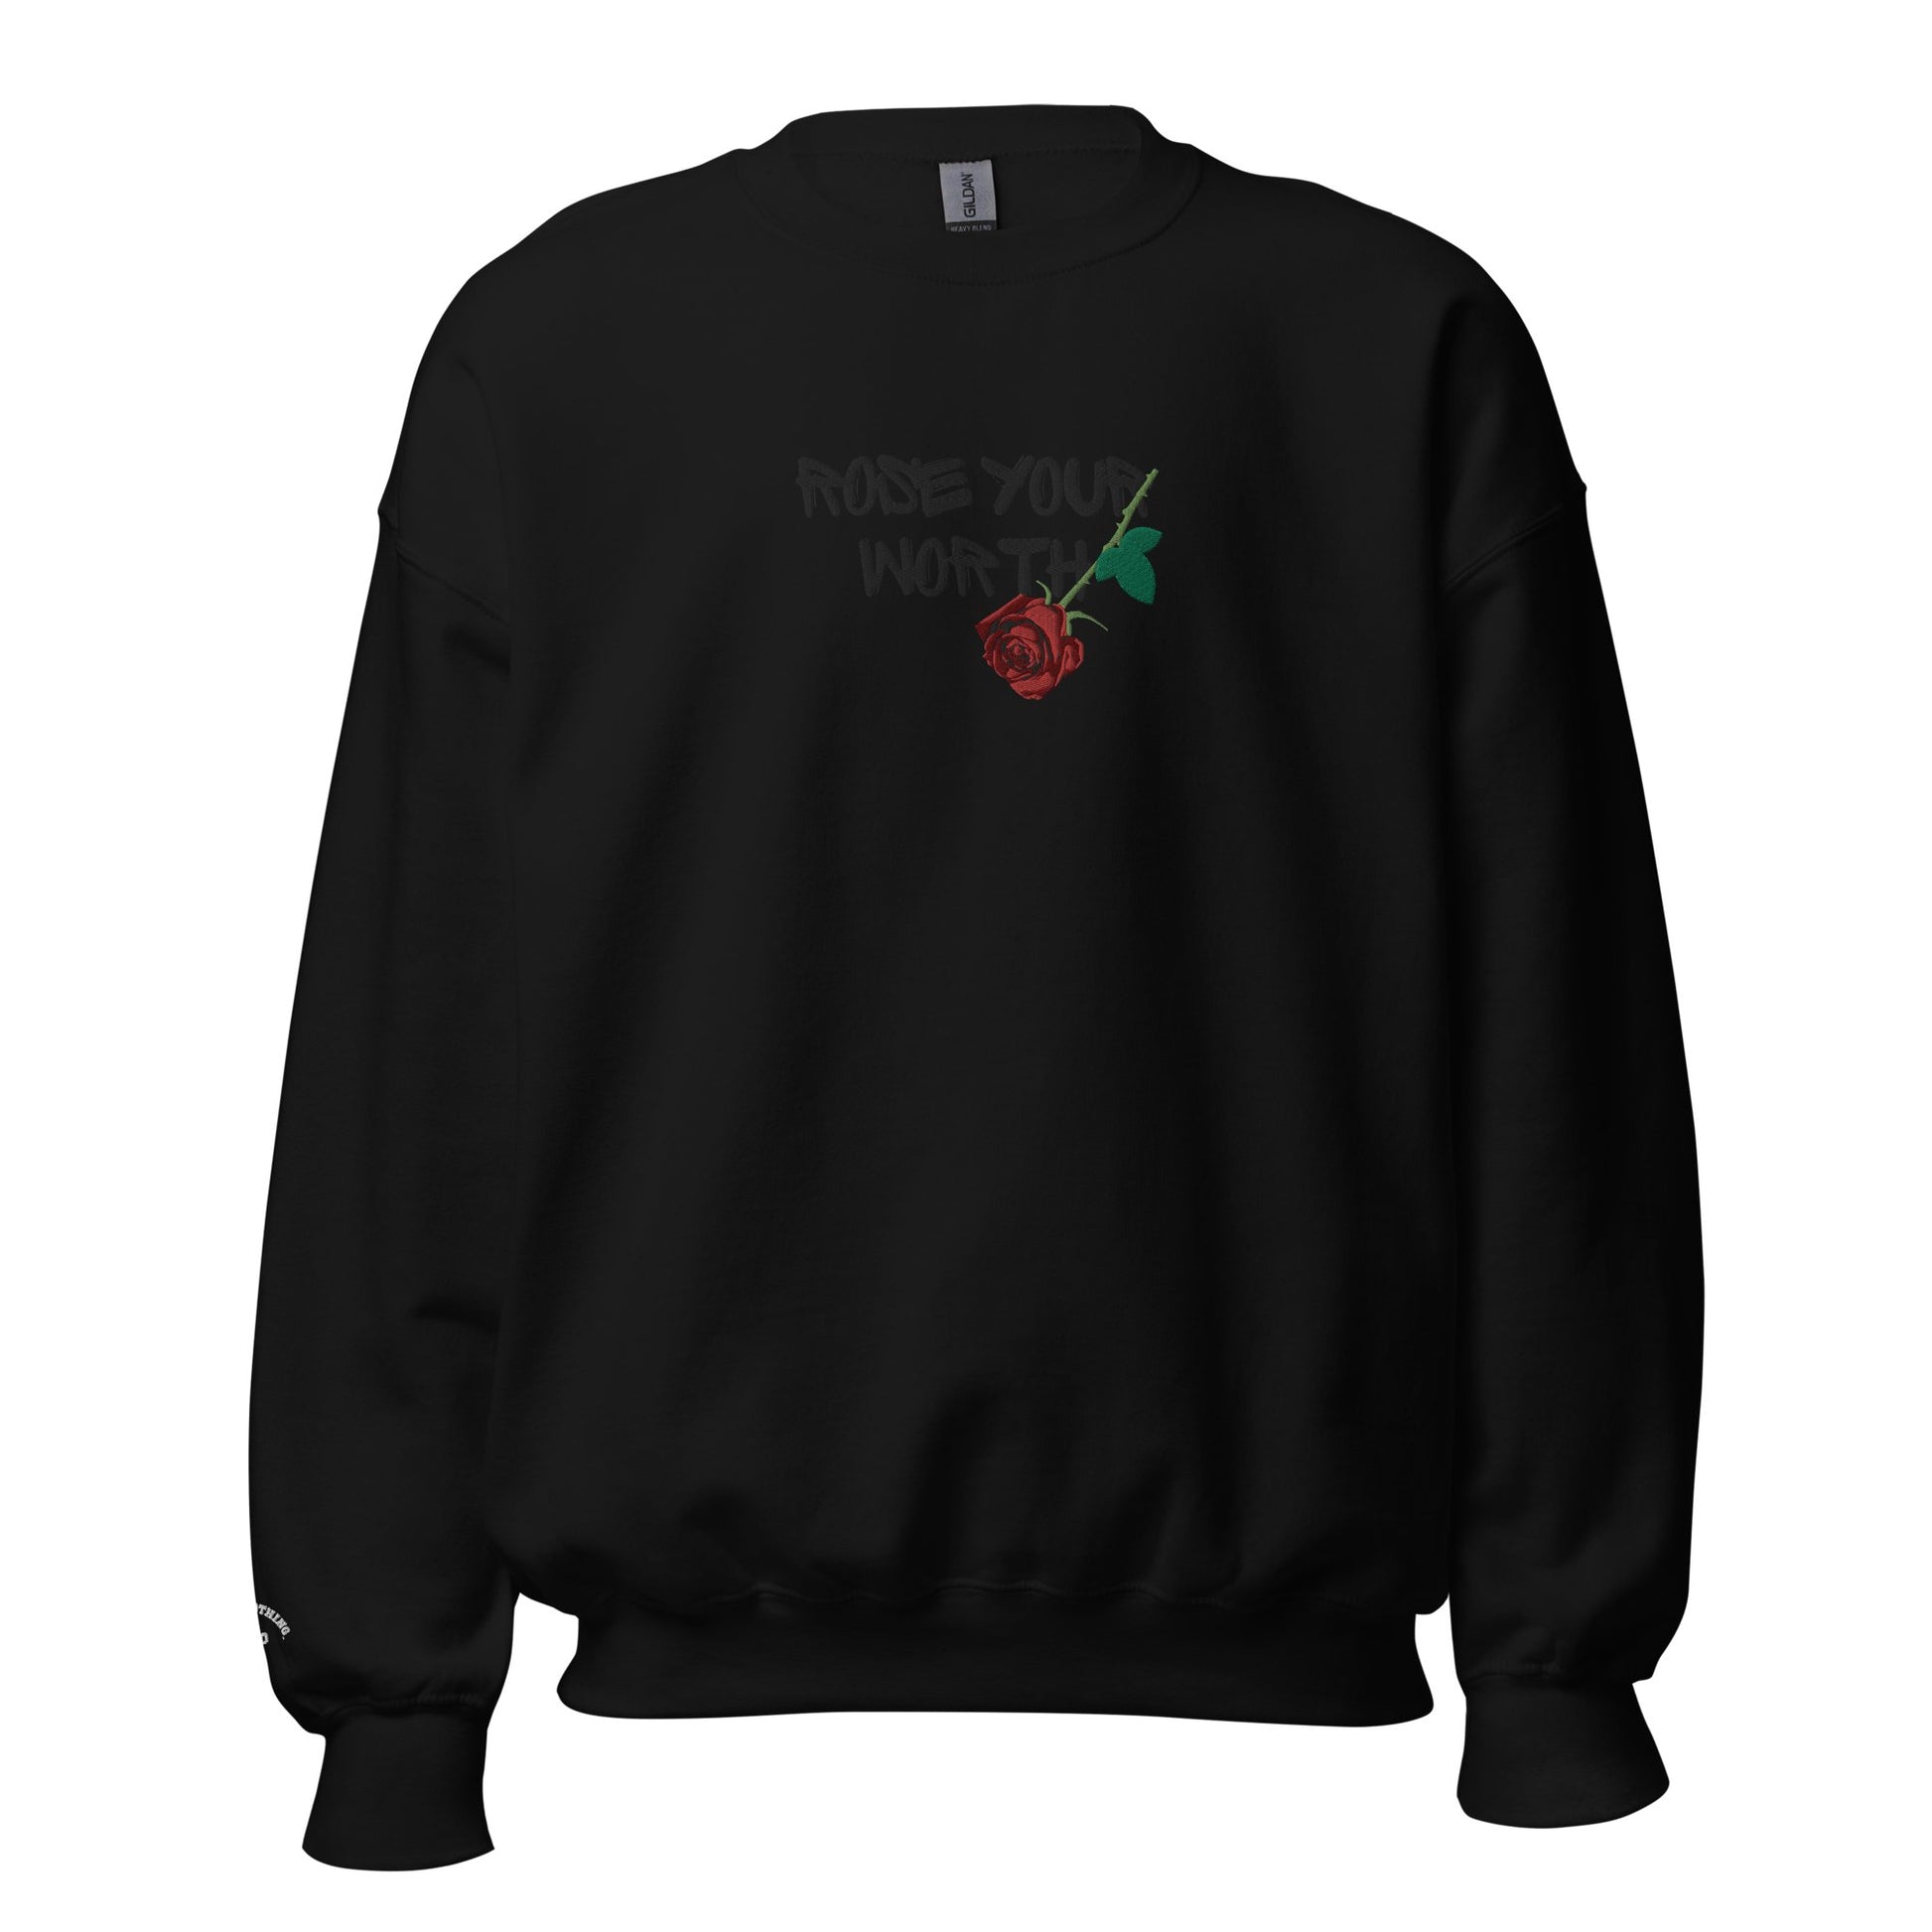 Rose Your Worth Embroidery Unisex Sweatshirt - Bearclothing